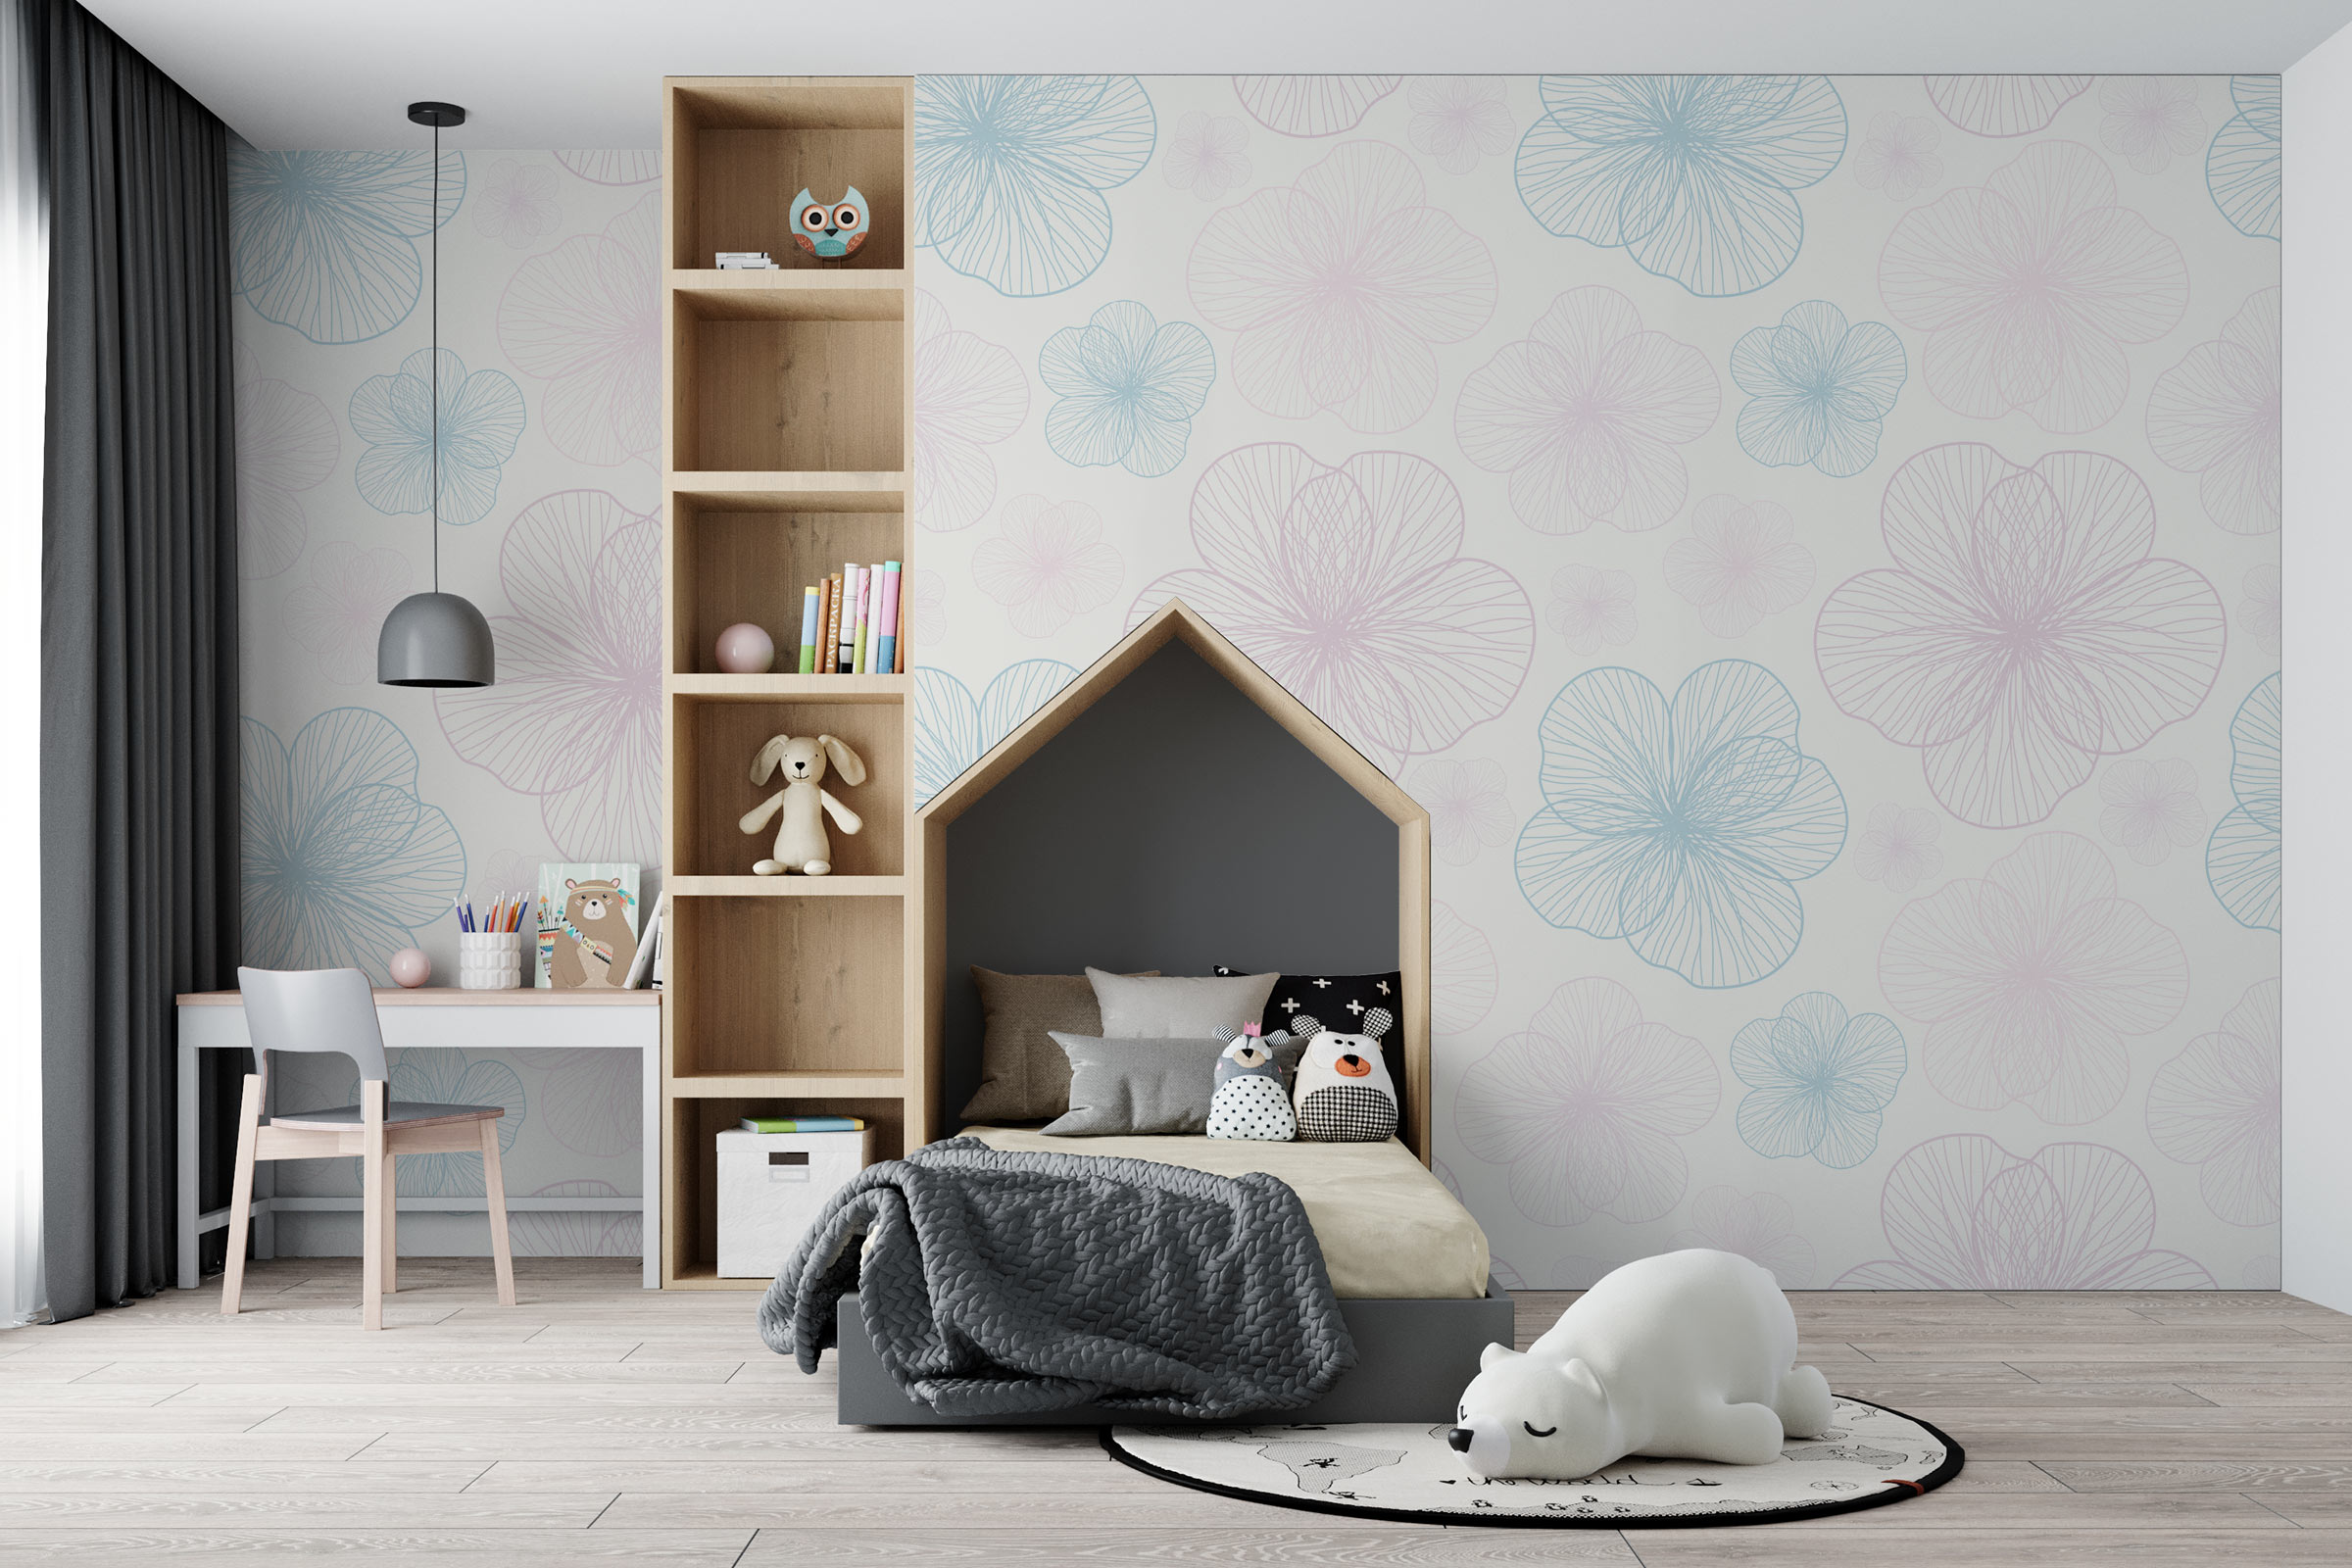 Big Flowers and Pastel Blooms Design Custom printed wallpaper